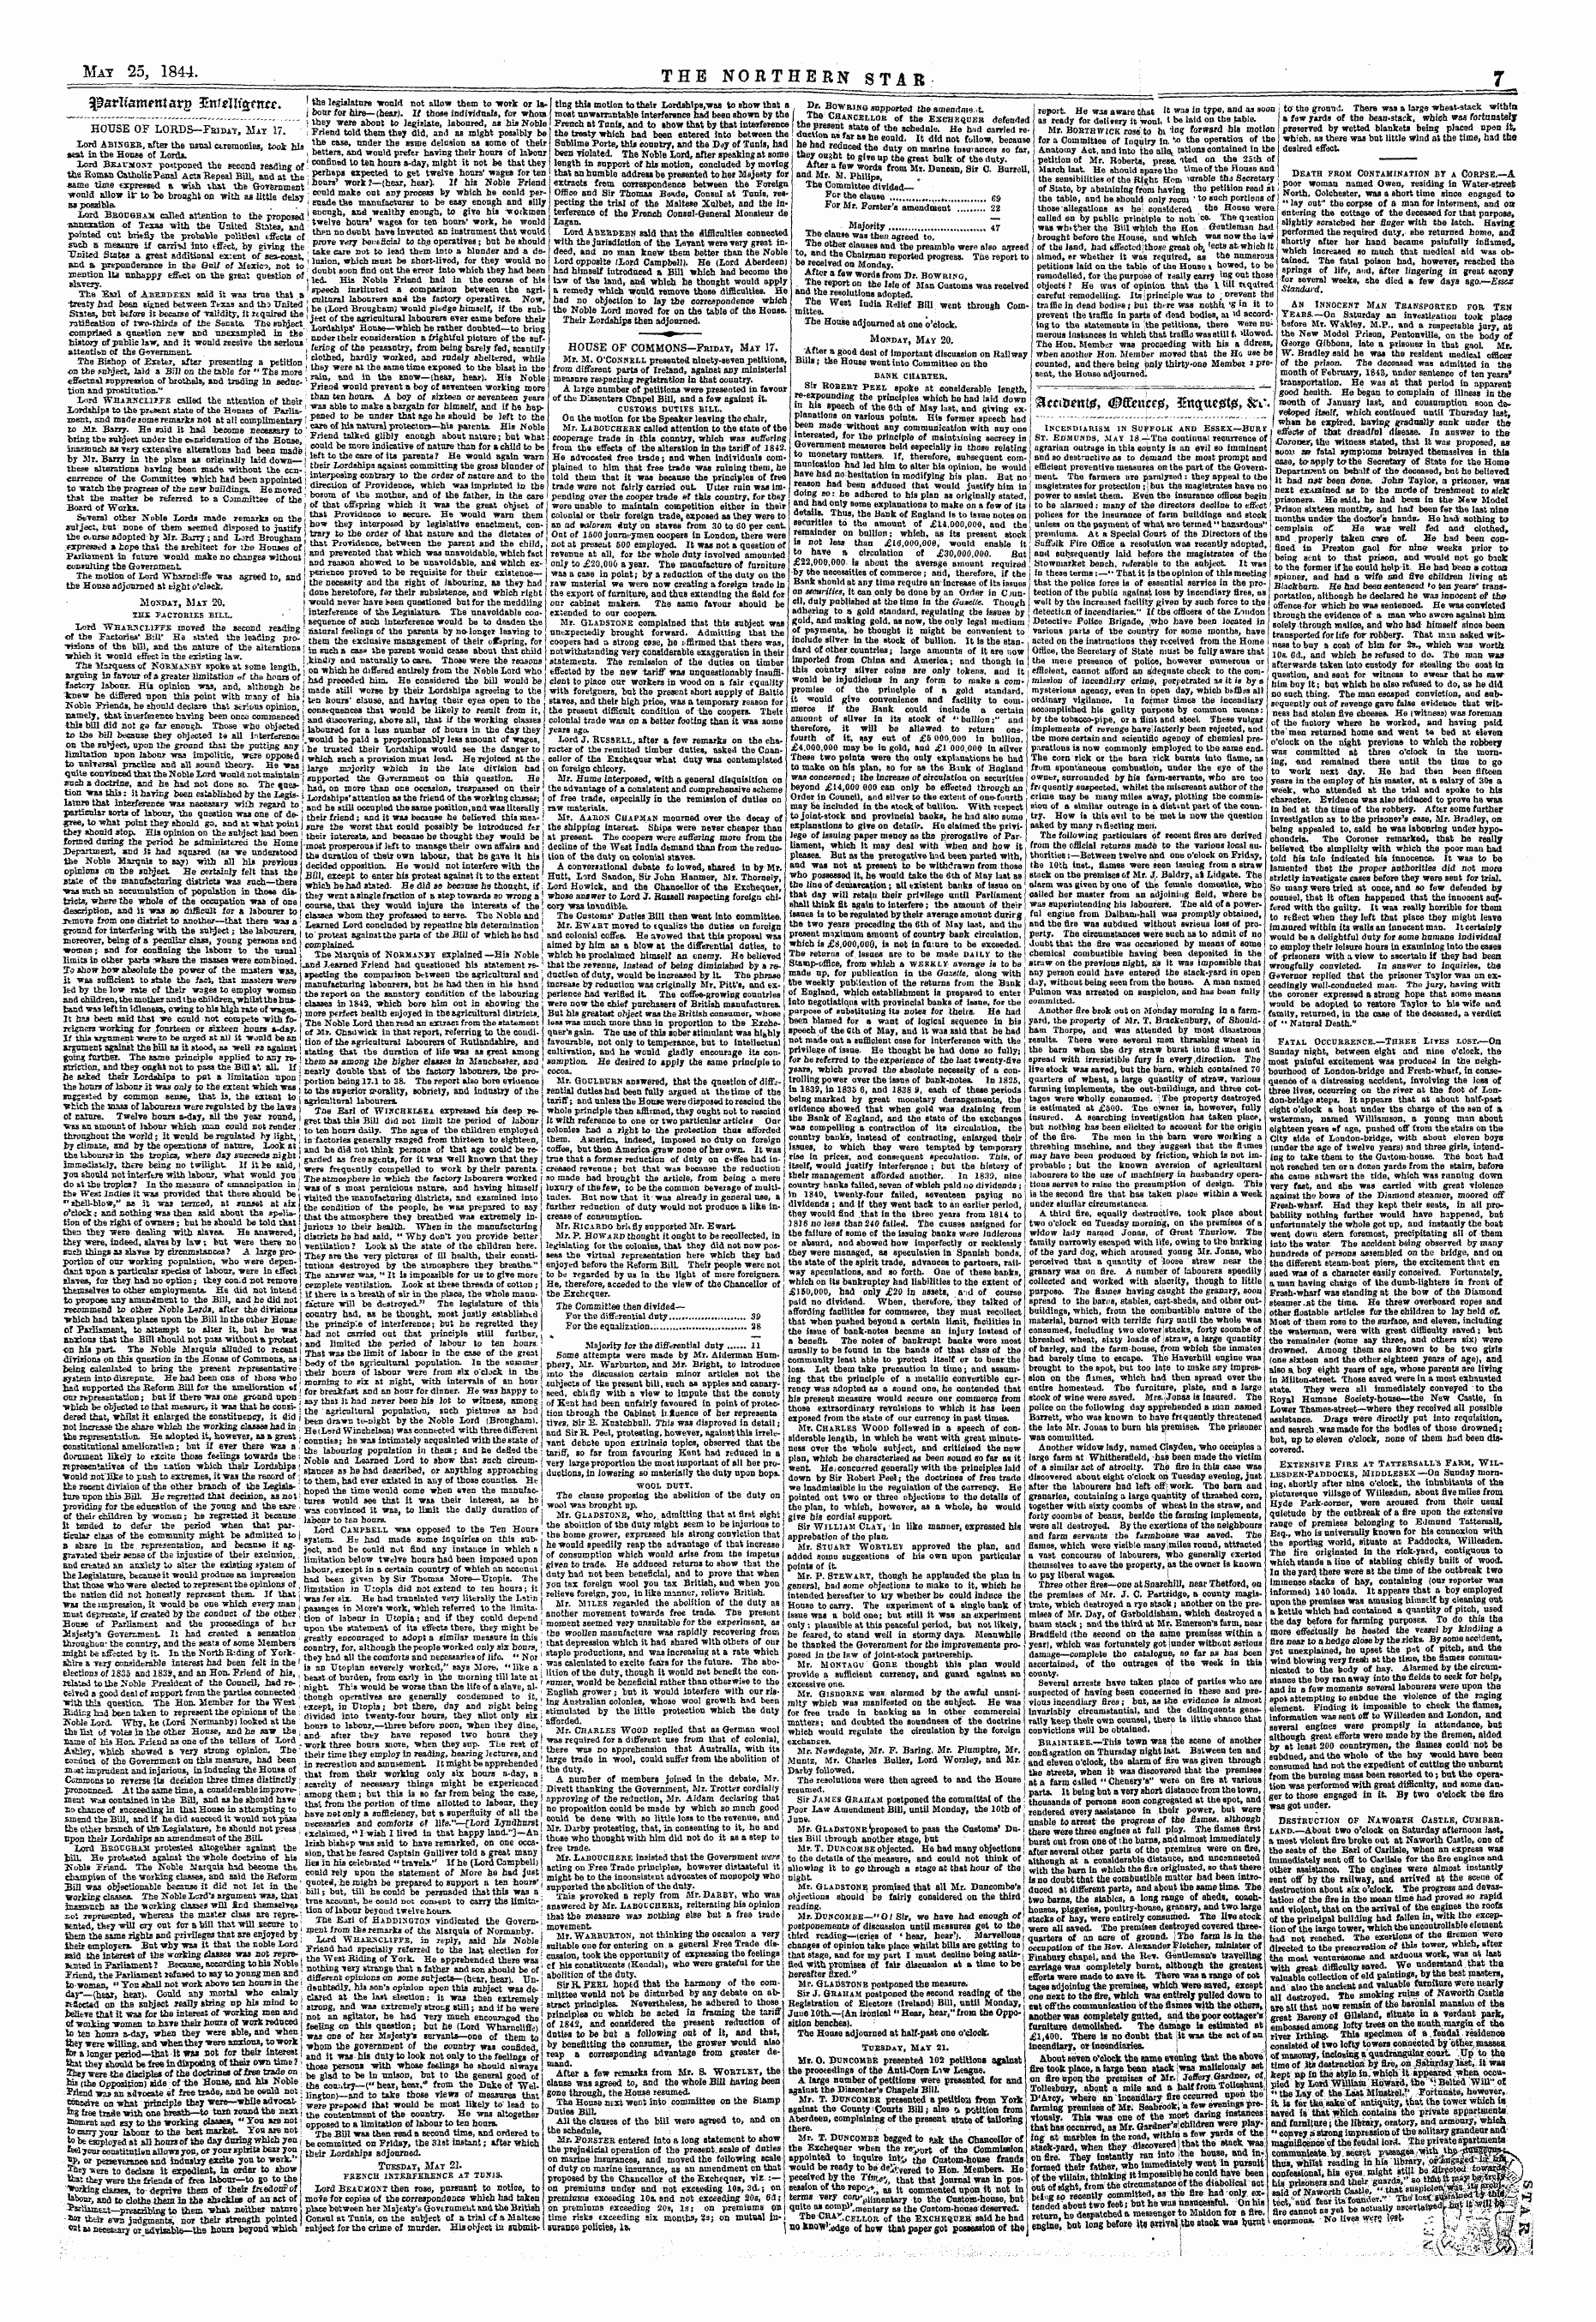 Northern Star (1837-1852): jS F Y, 1st edition - &Lt; $Tt(Fr*Ttt& &Lt;©Ffieiwg&Gt; 3£Nauegt&&I